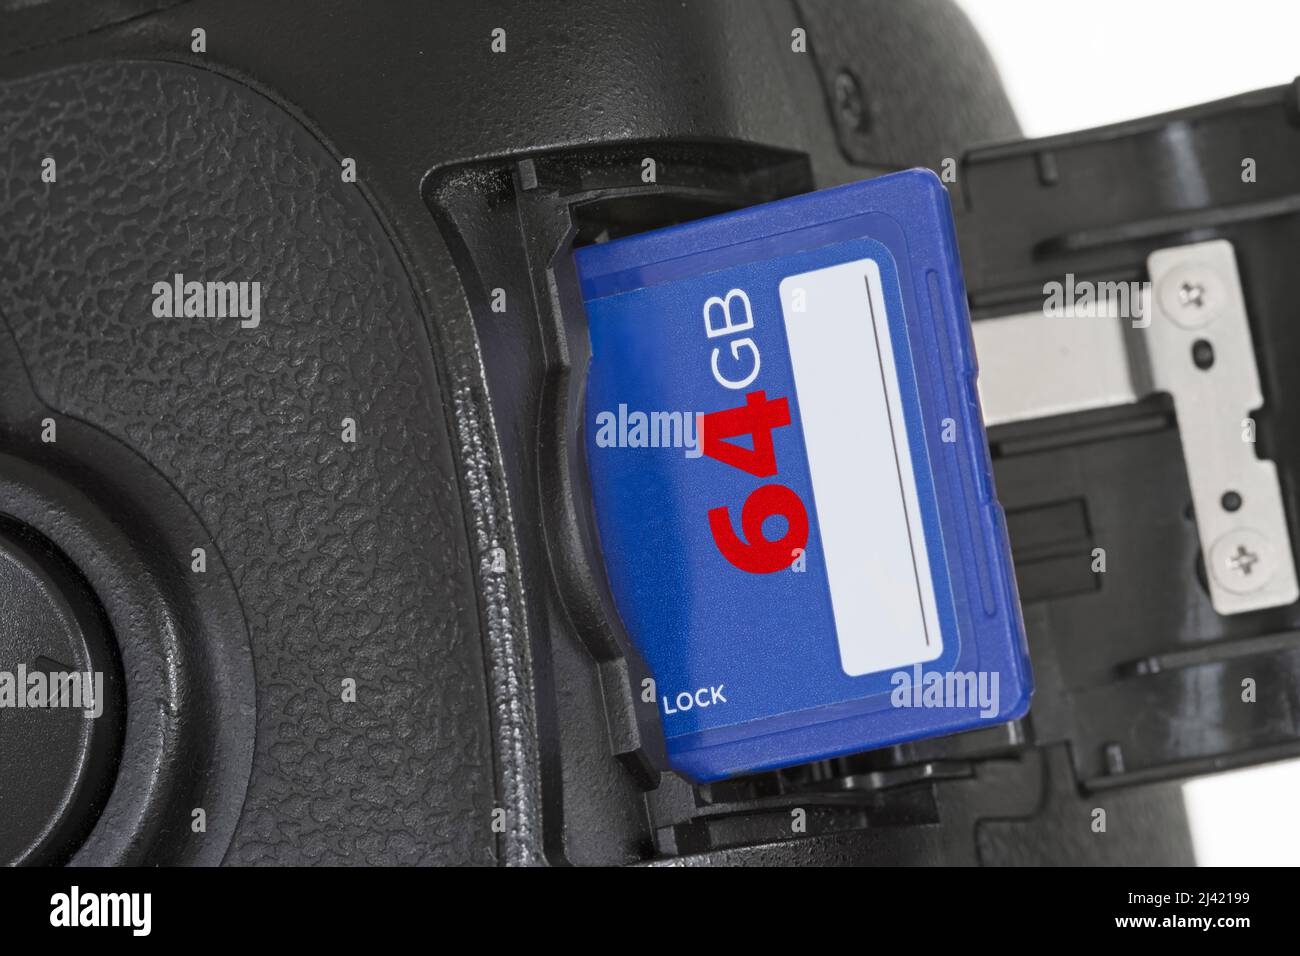 SD card in digital camera Stock Photo